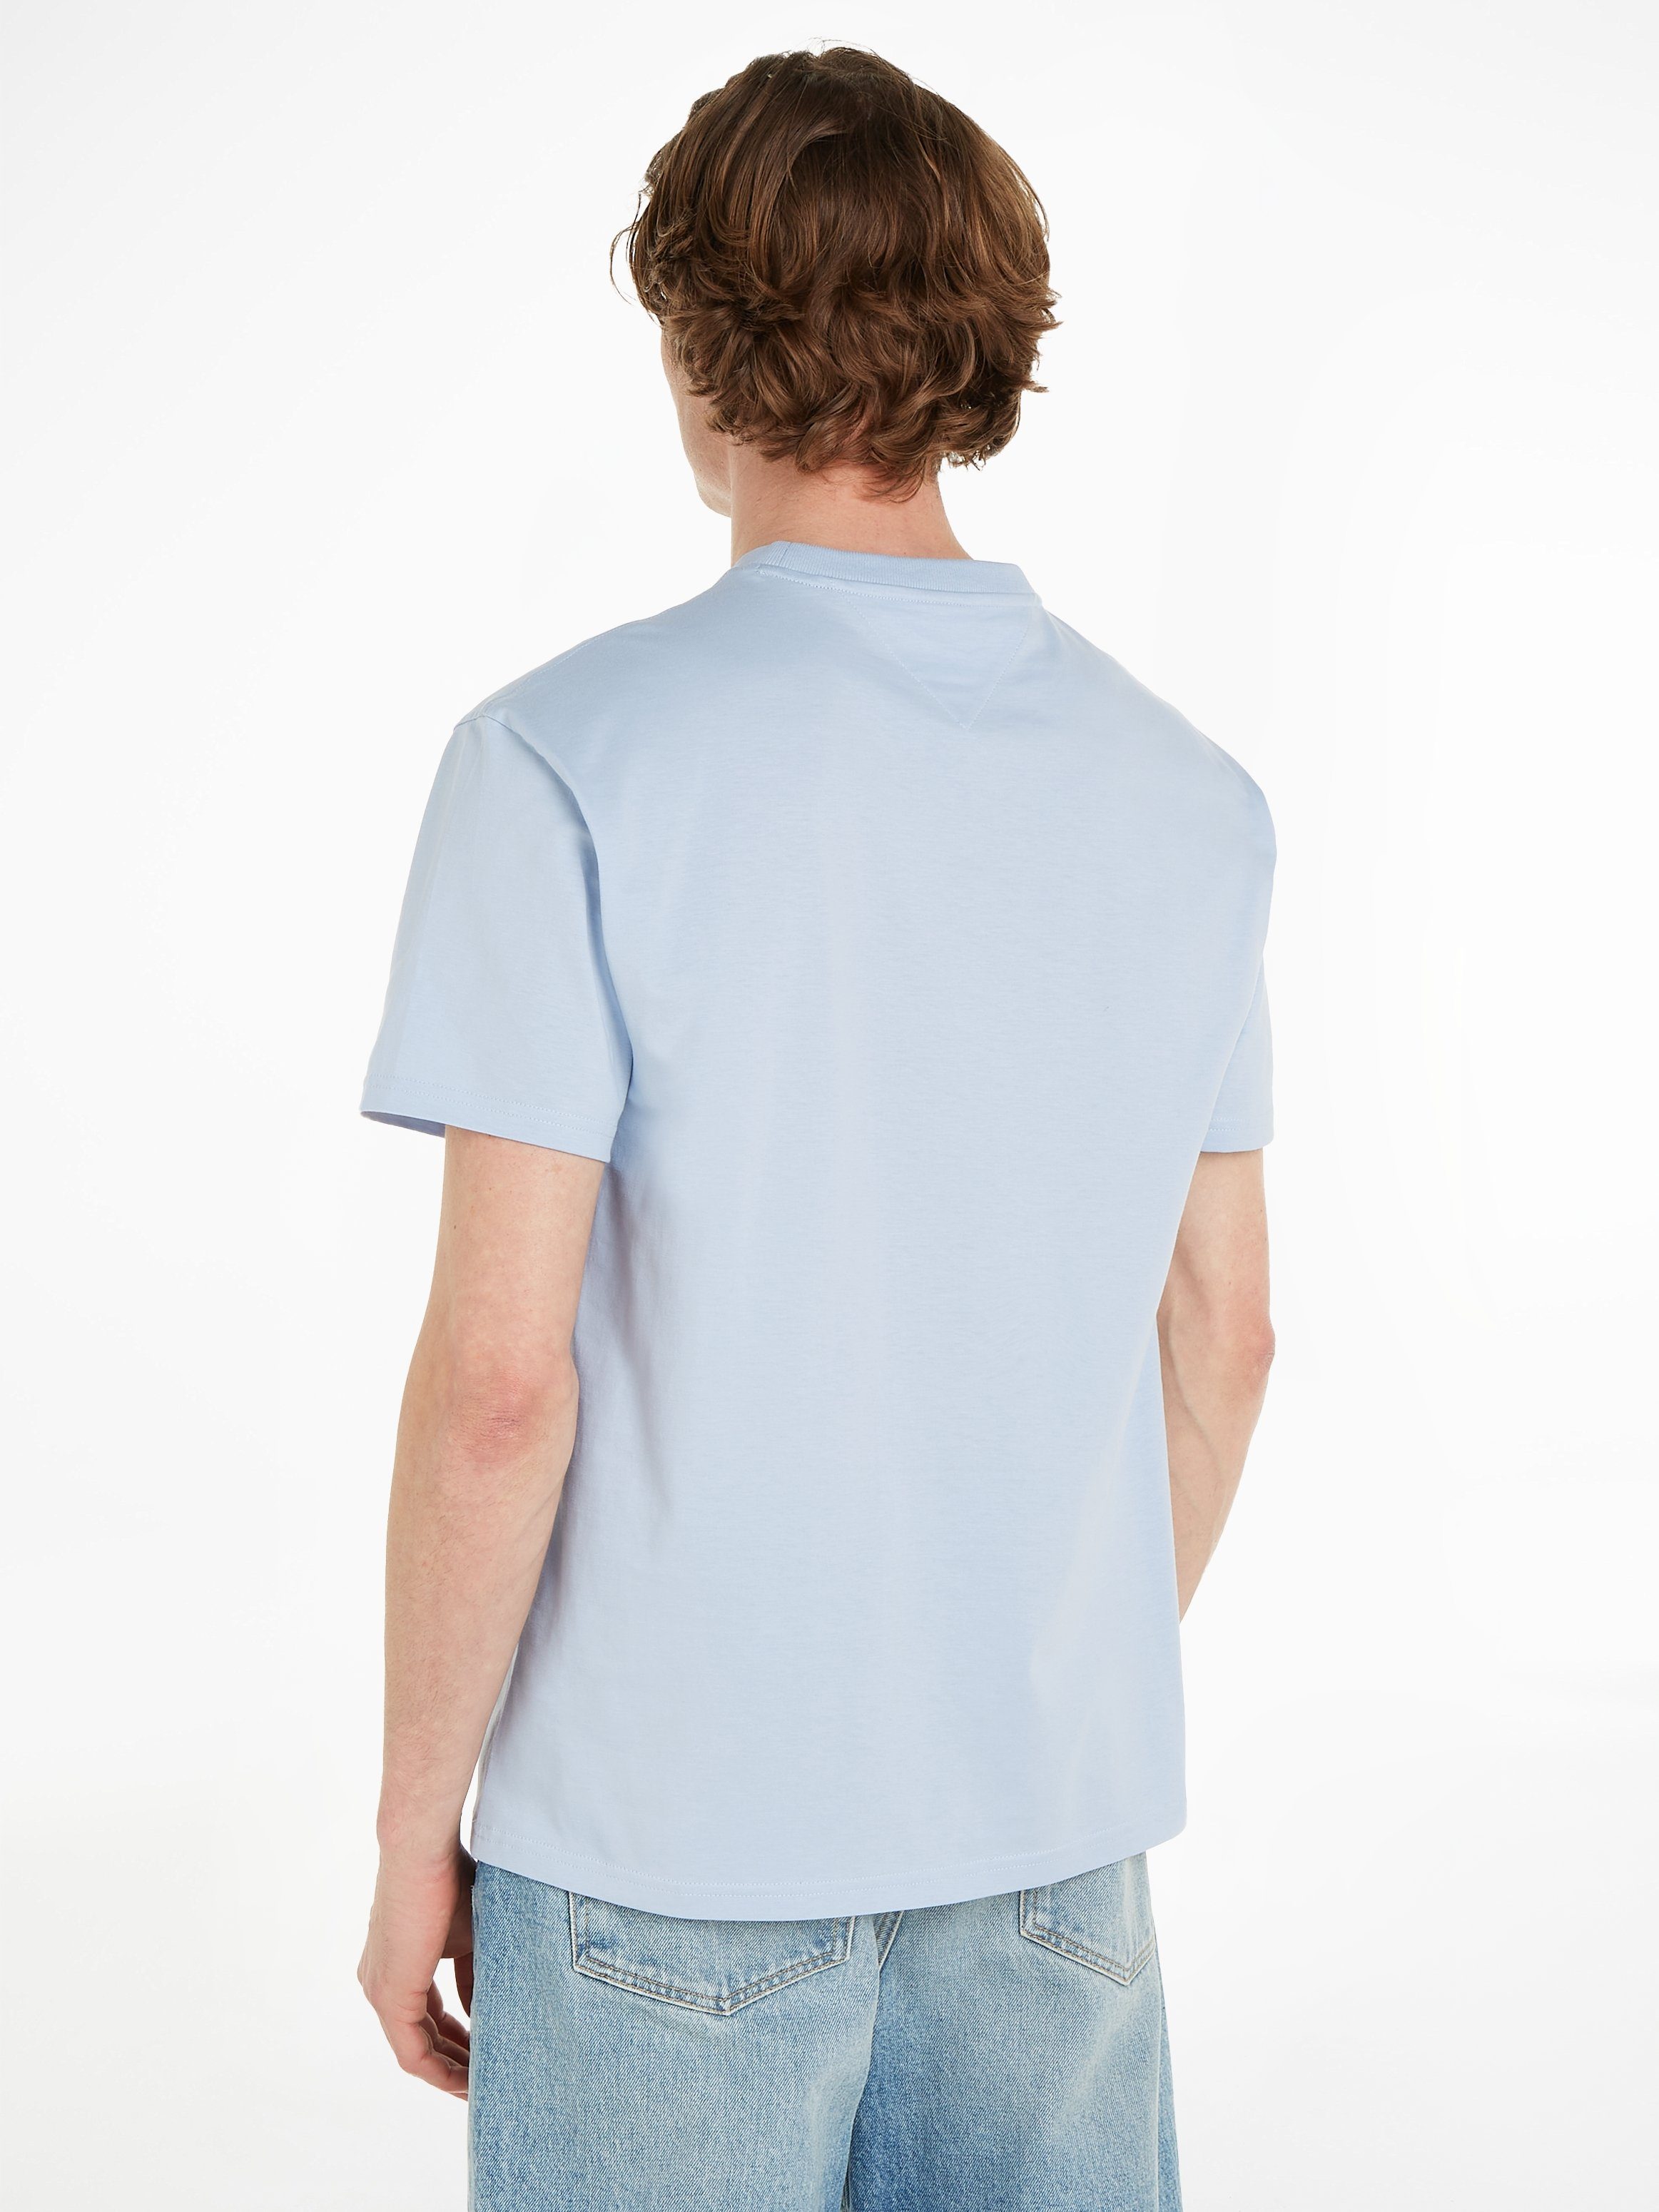 Tommy Jeans T-Shirt TJM CLASSIC JERSEY C Logostickerei blue NECK breezy mit